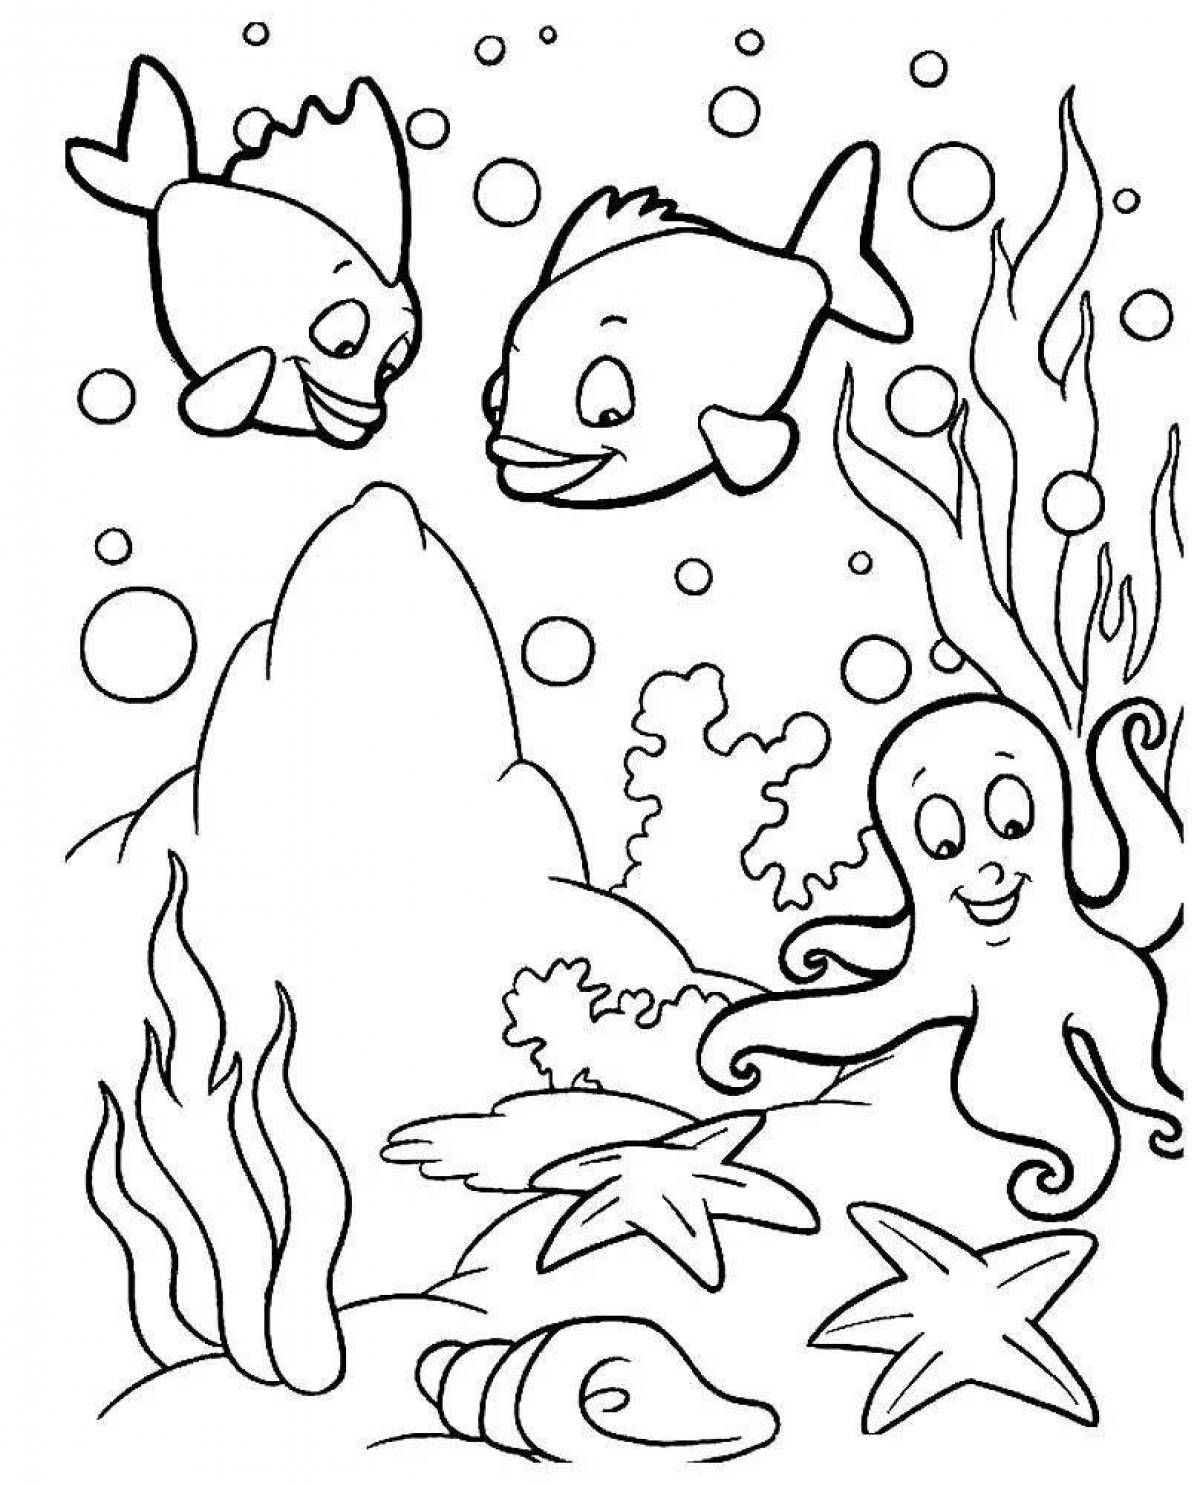 Exotic aquatic life coloring page